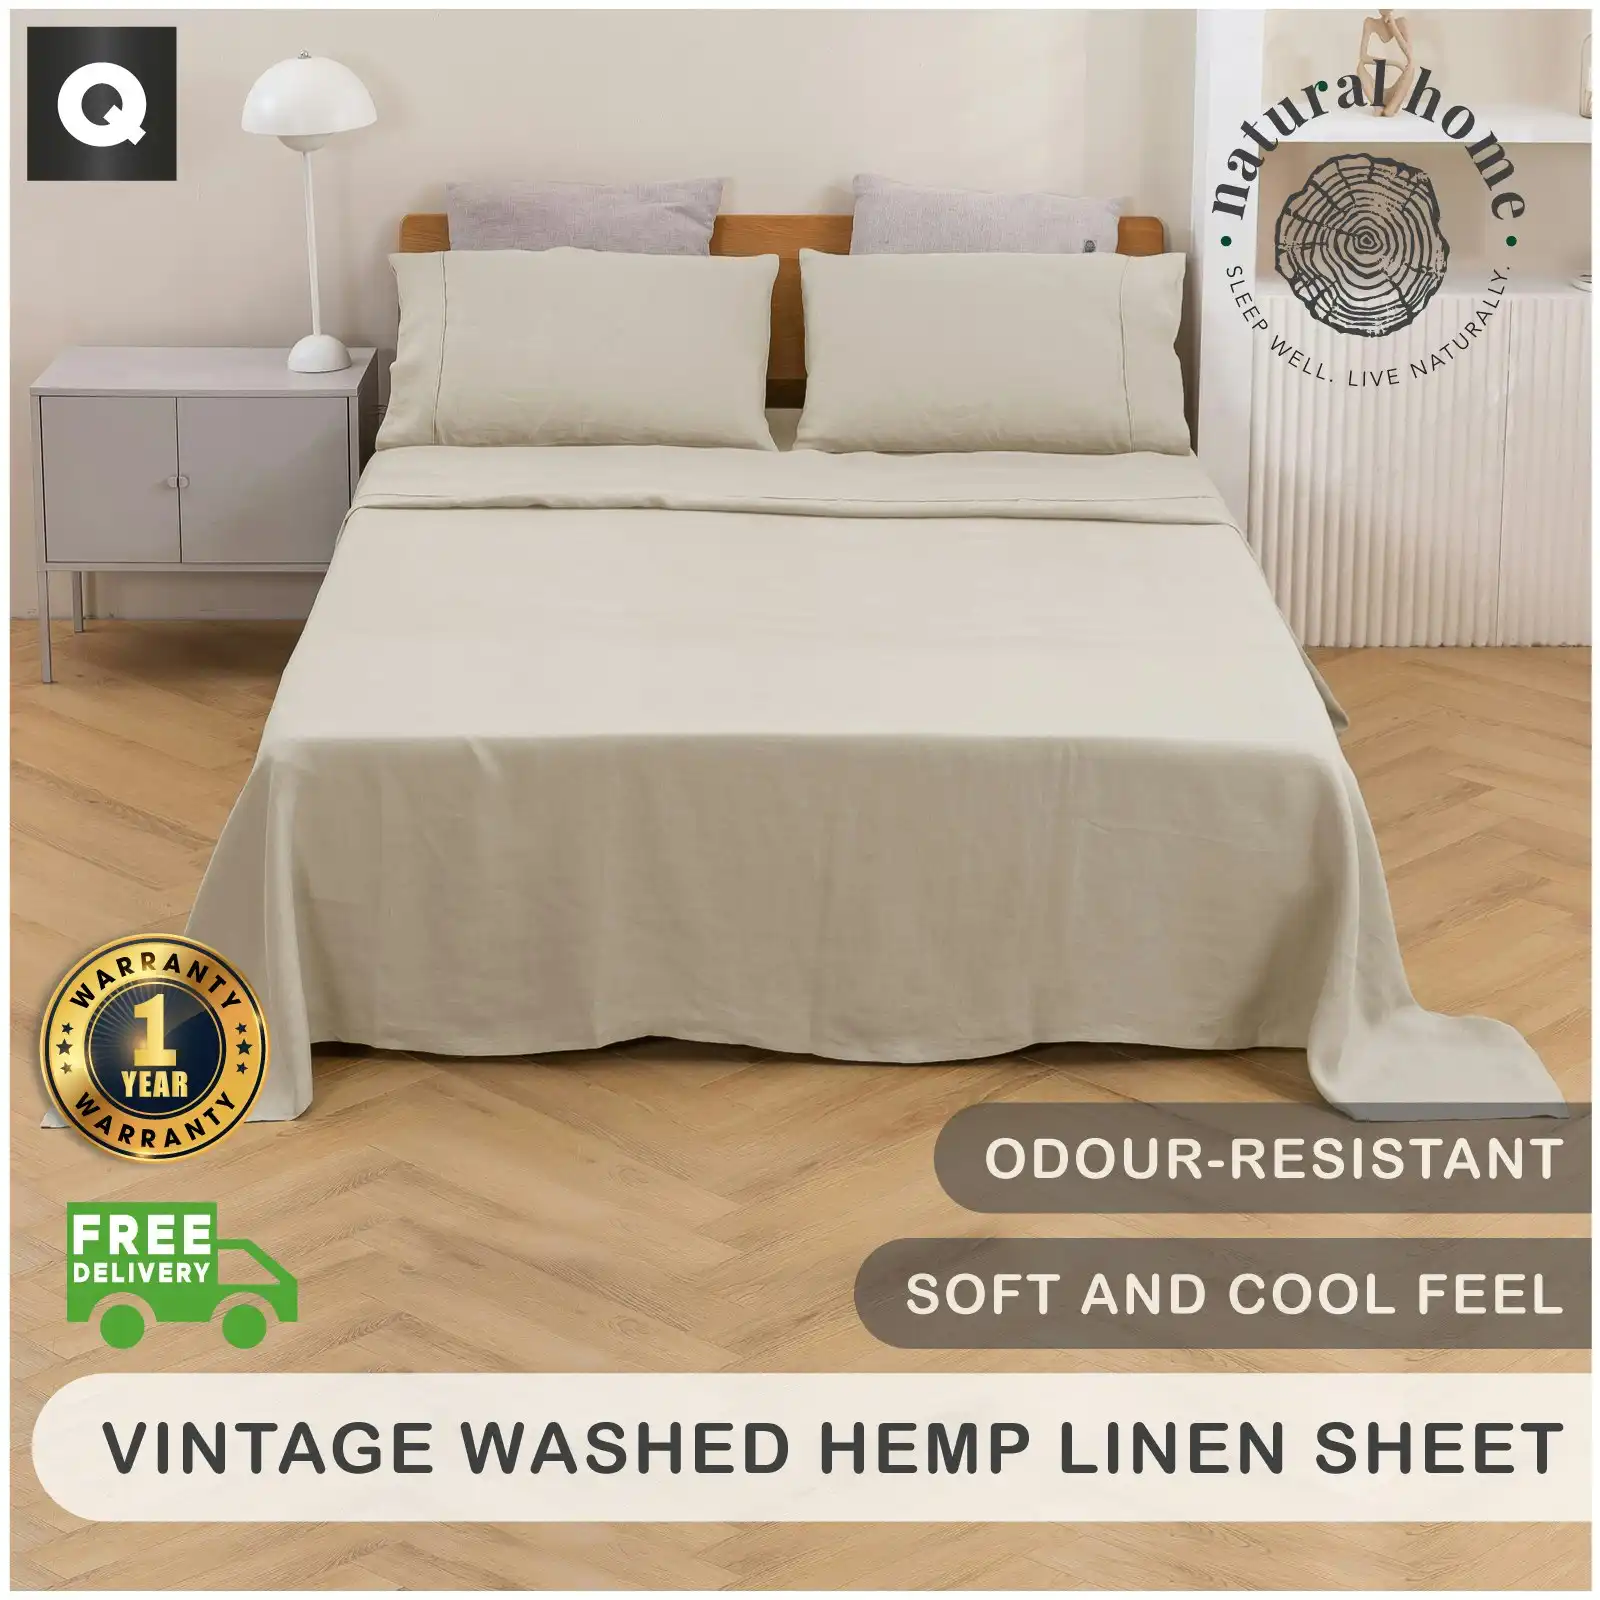 Natural Home Vintage Washed Hemp Linen Sheet Set Oatmeal Queen Bed